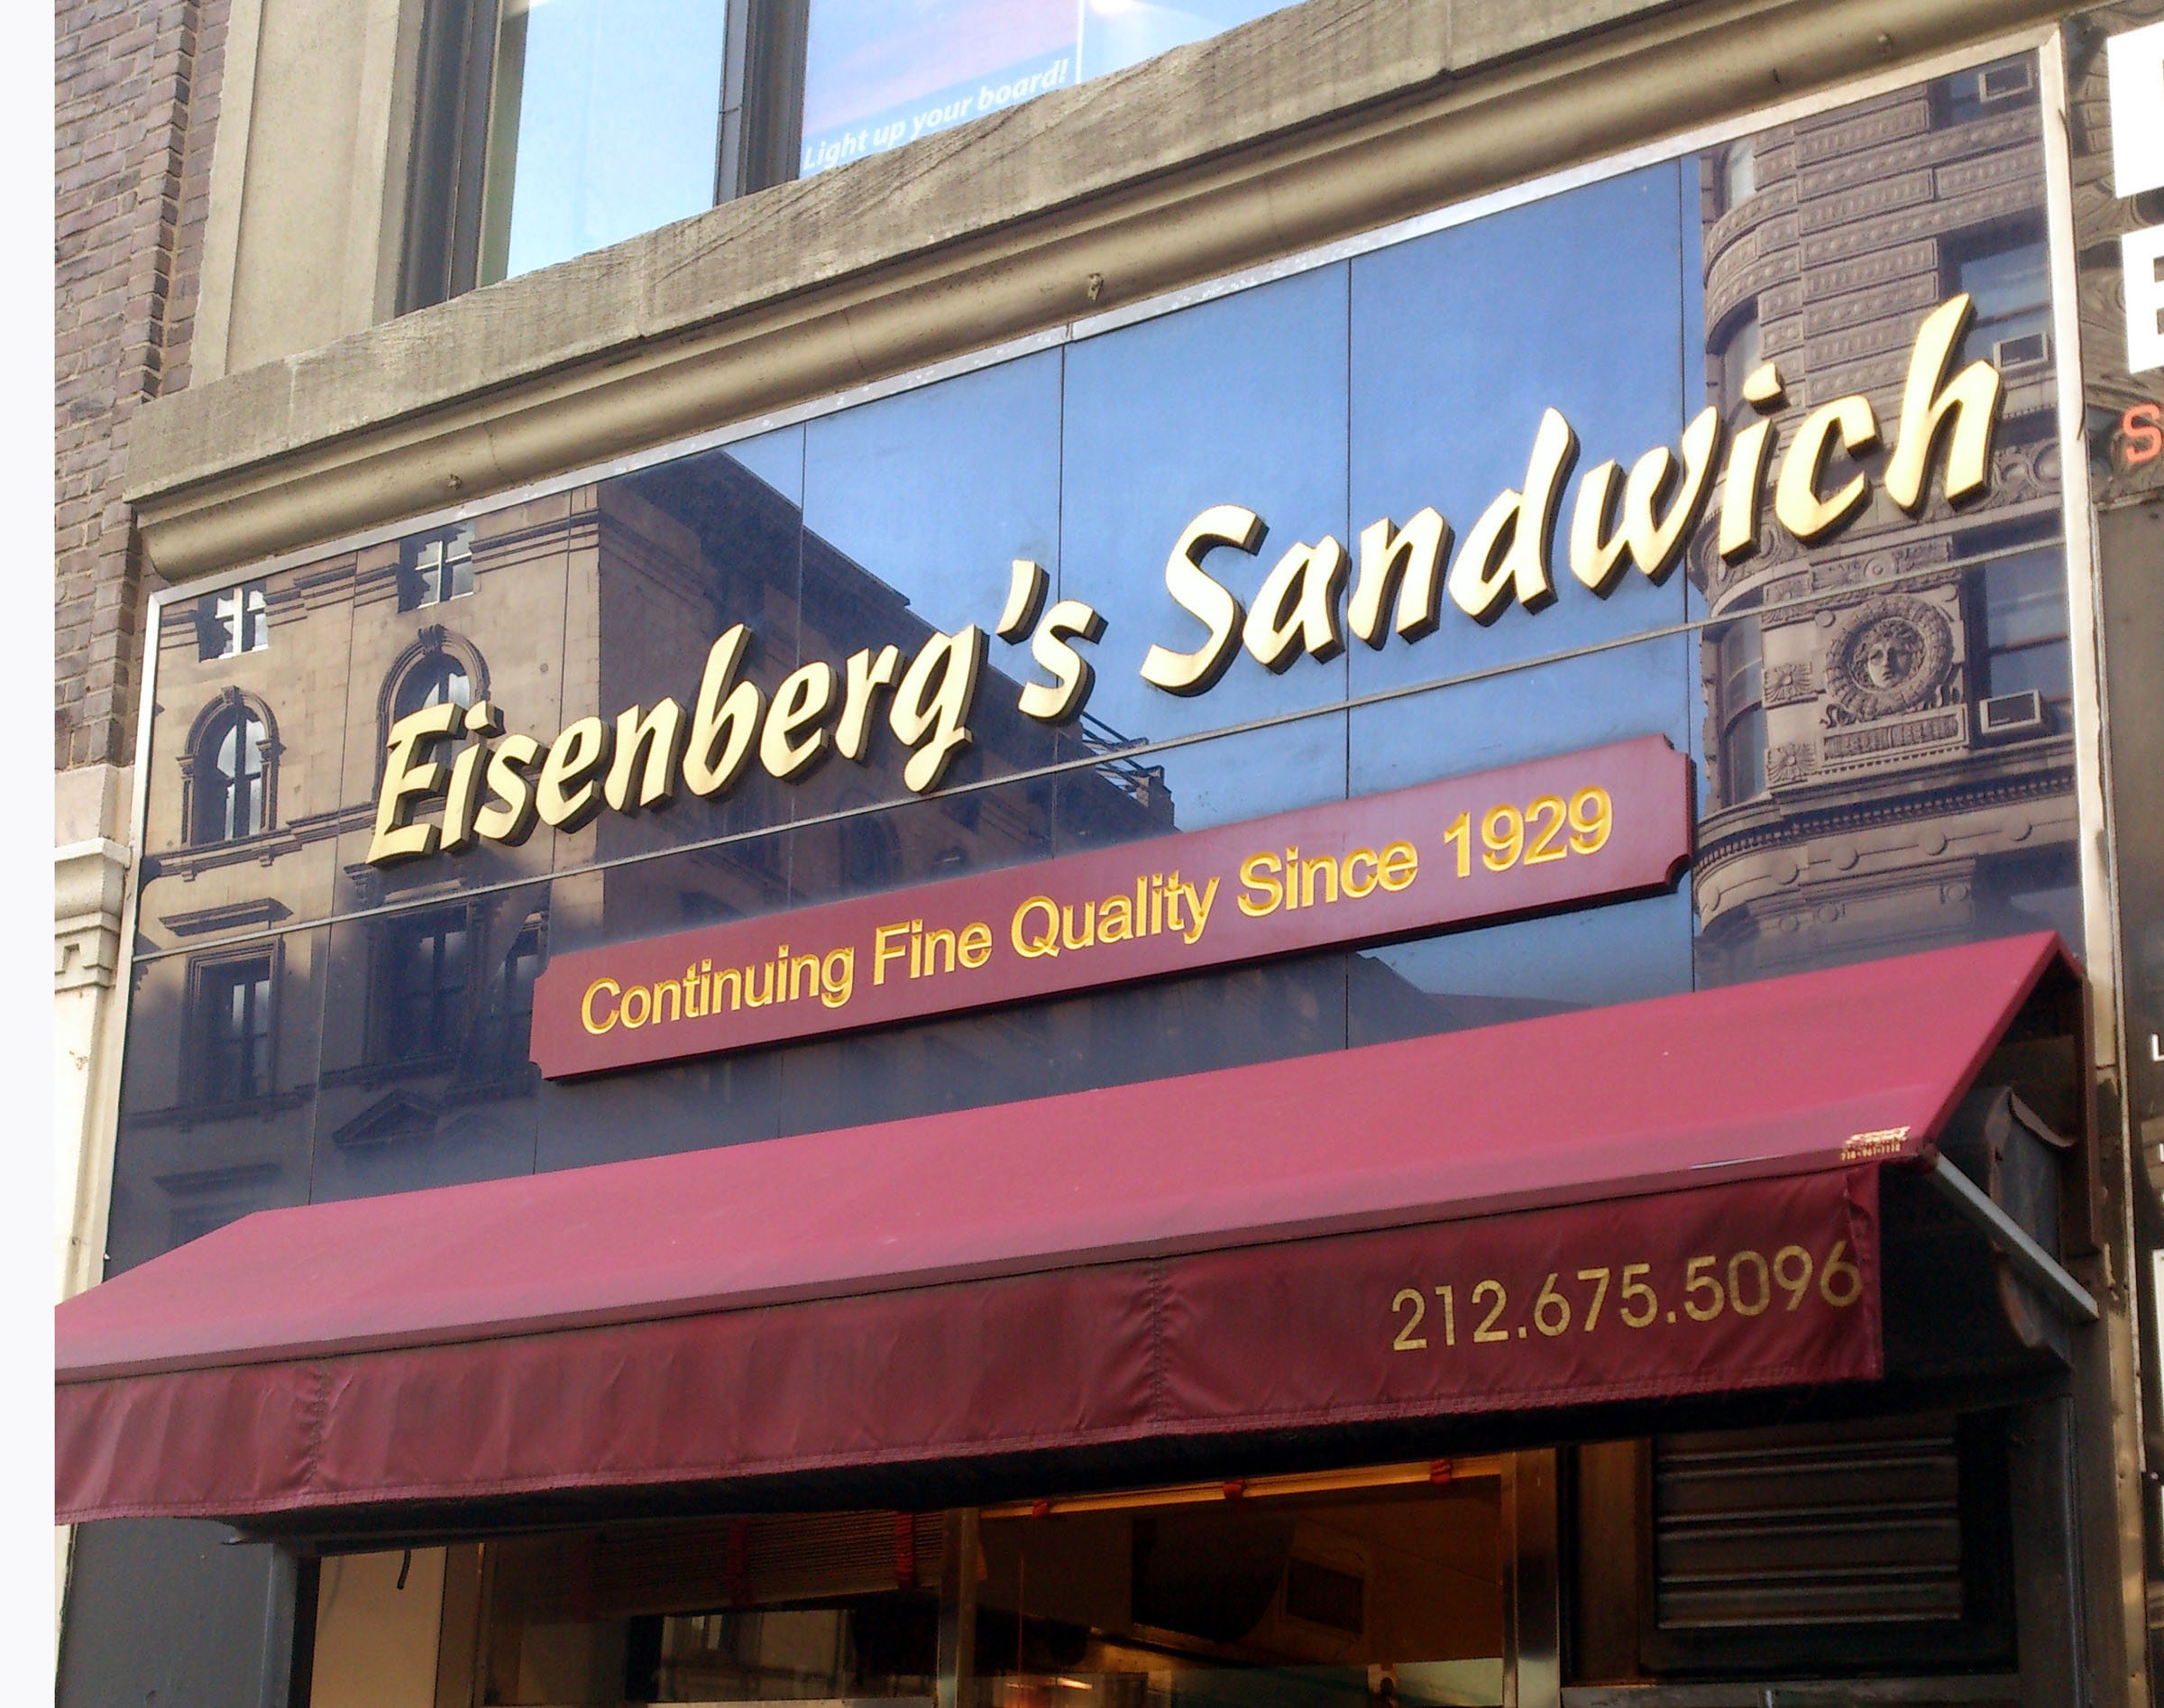 174 Fifth Avenue Eisenbergs Sandwich Shop 